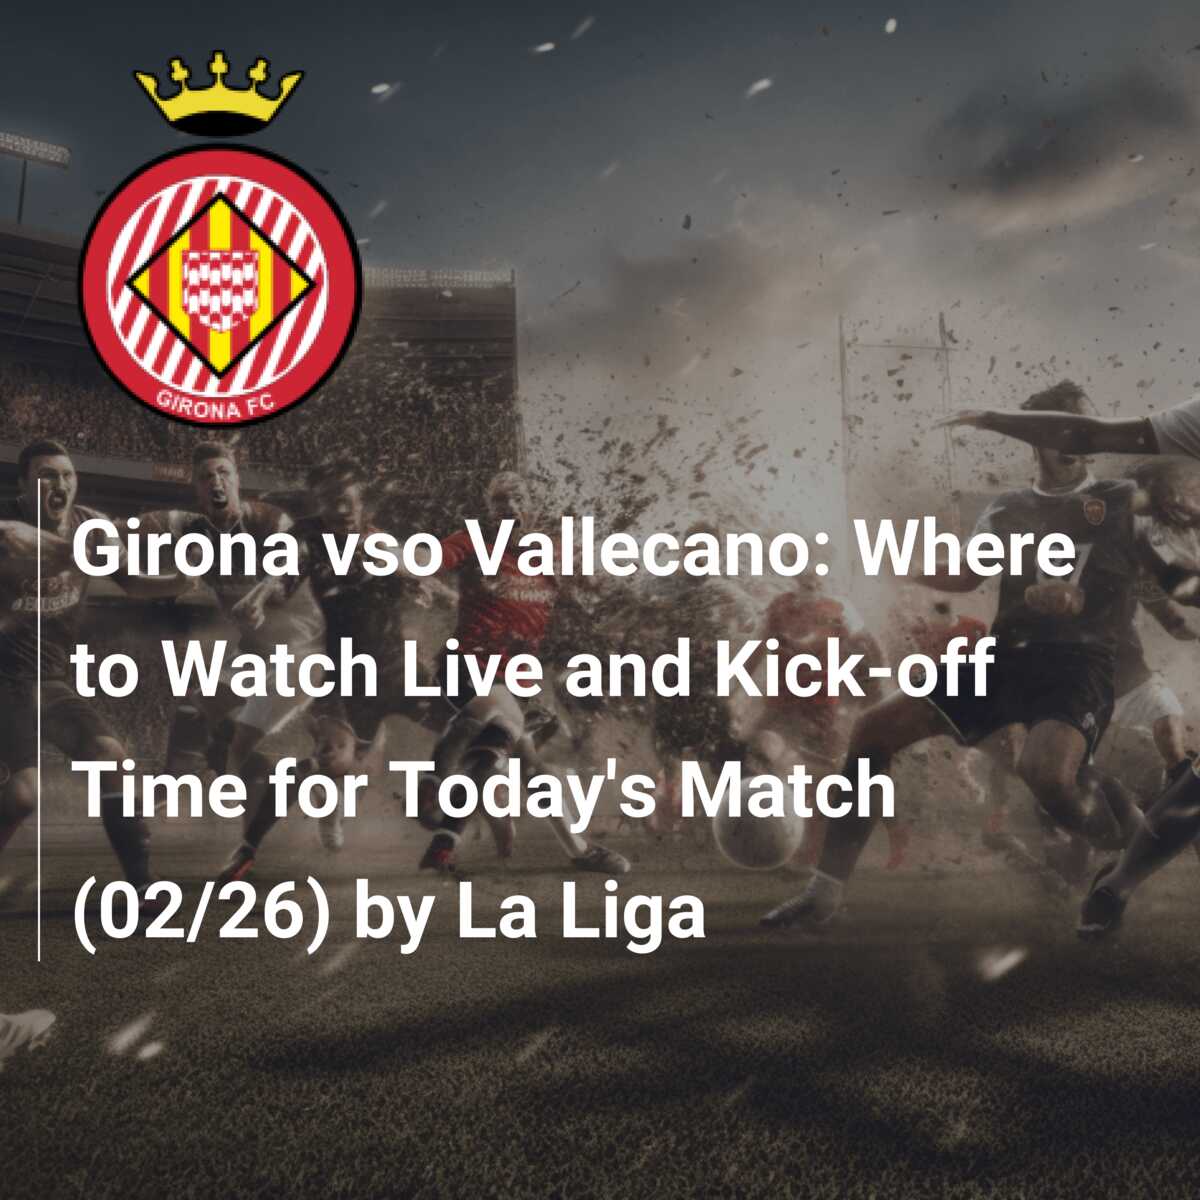 Watch Girona FC vs. Rayo Vallecano Online: Live Stream, Start Time